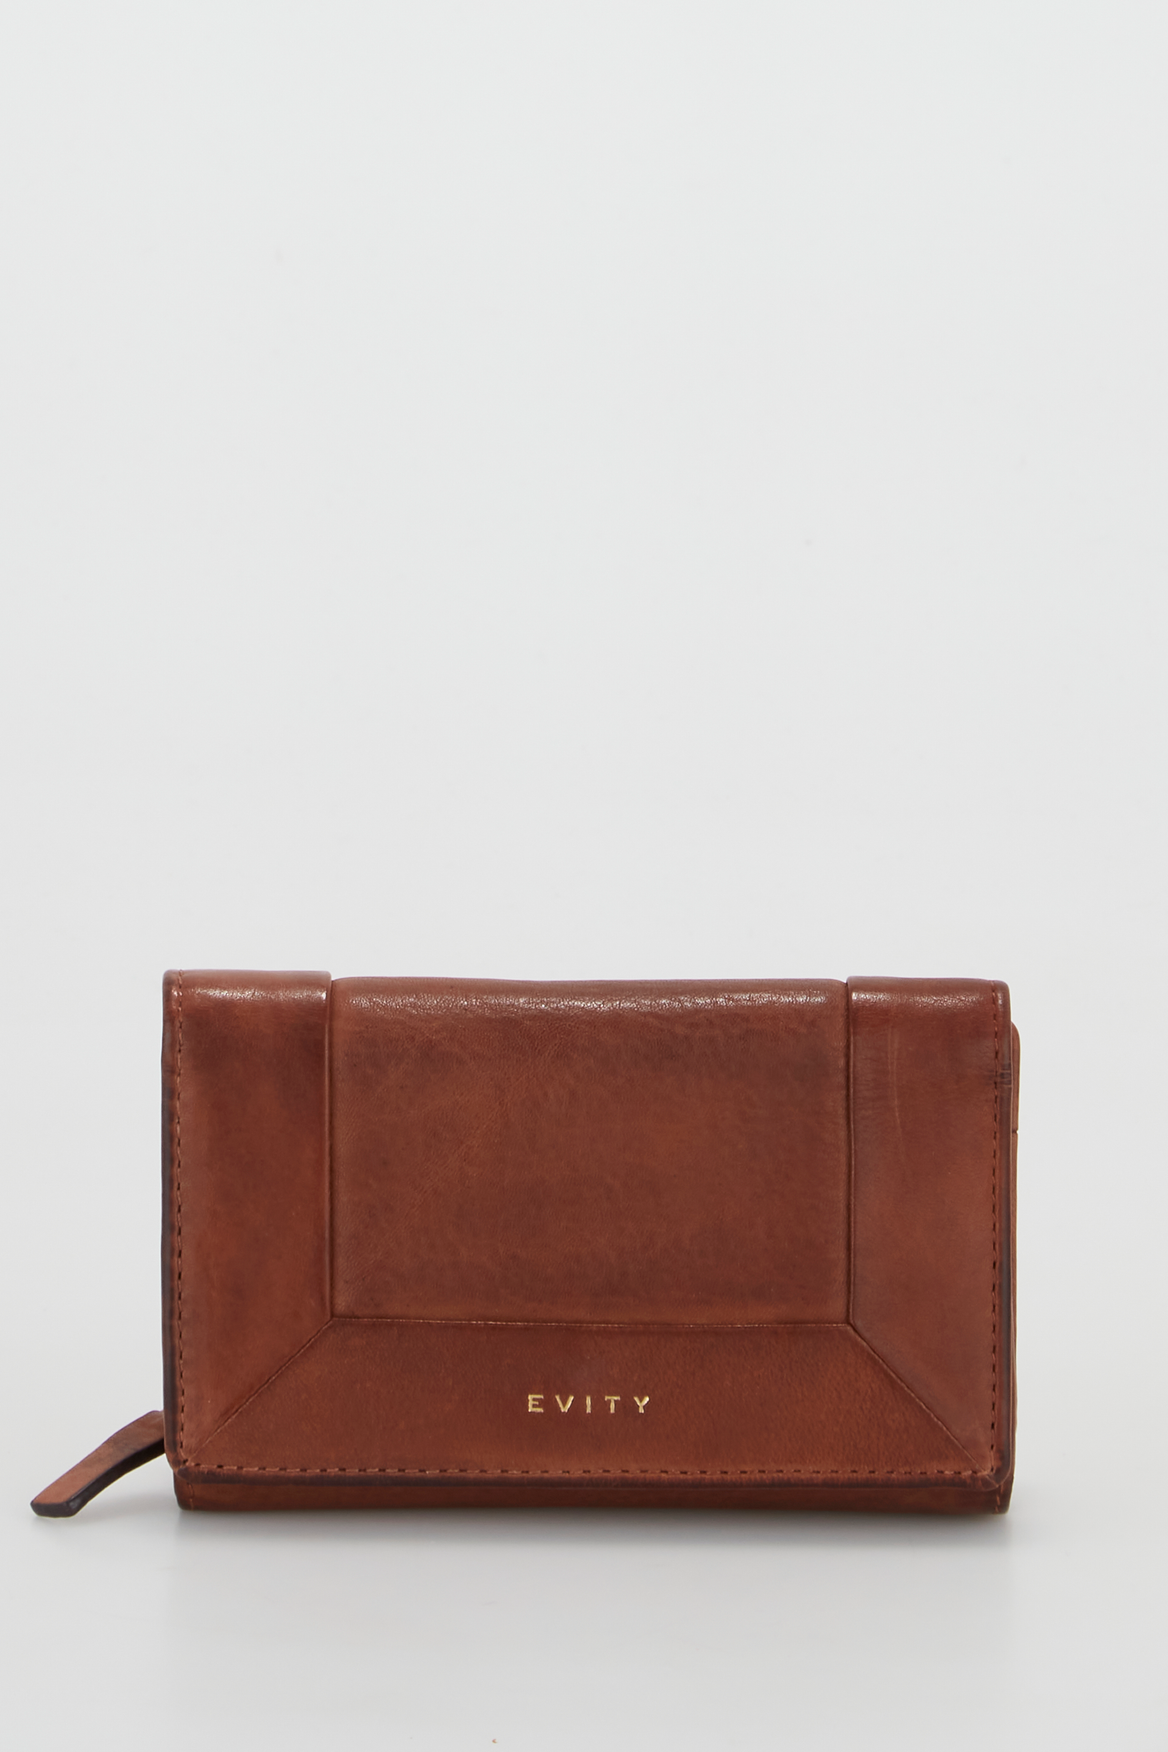 Evity Fiona Leather Medium Wallet – Strandbags Australia